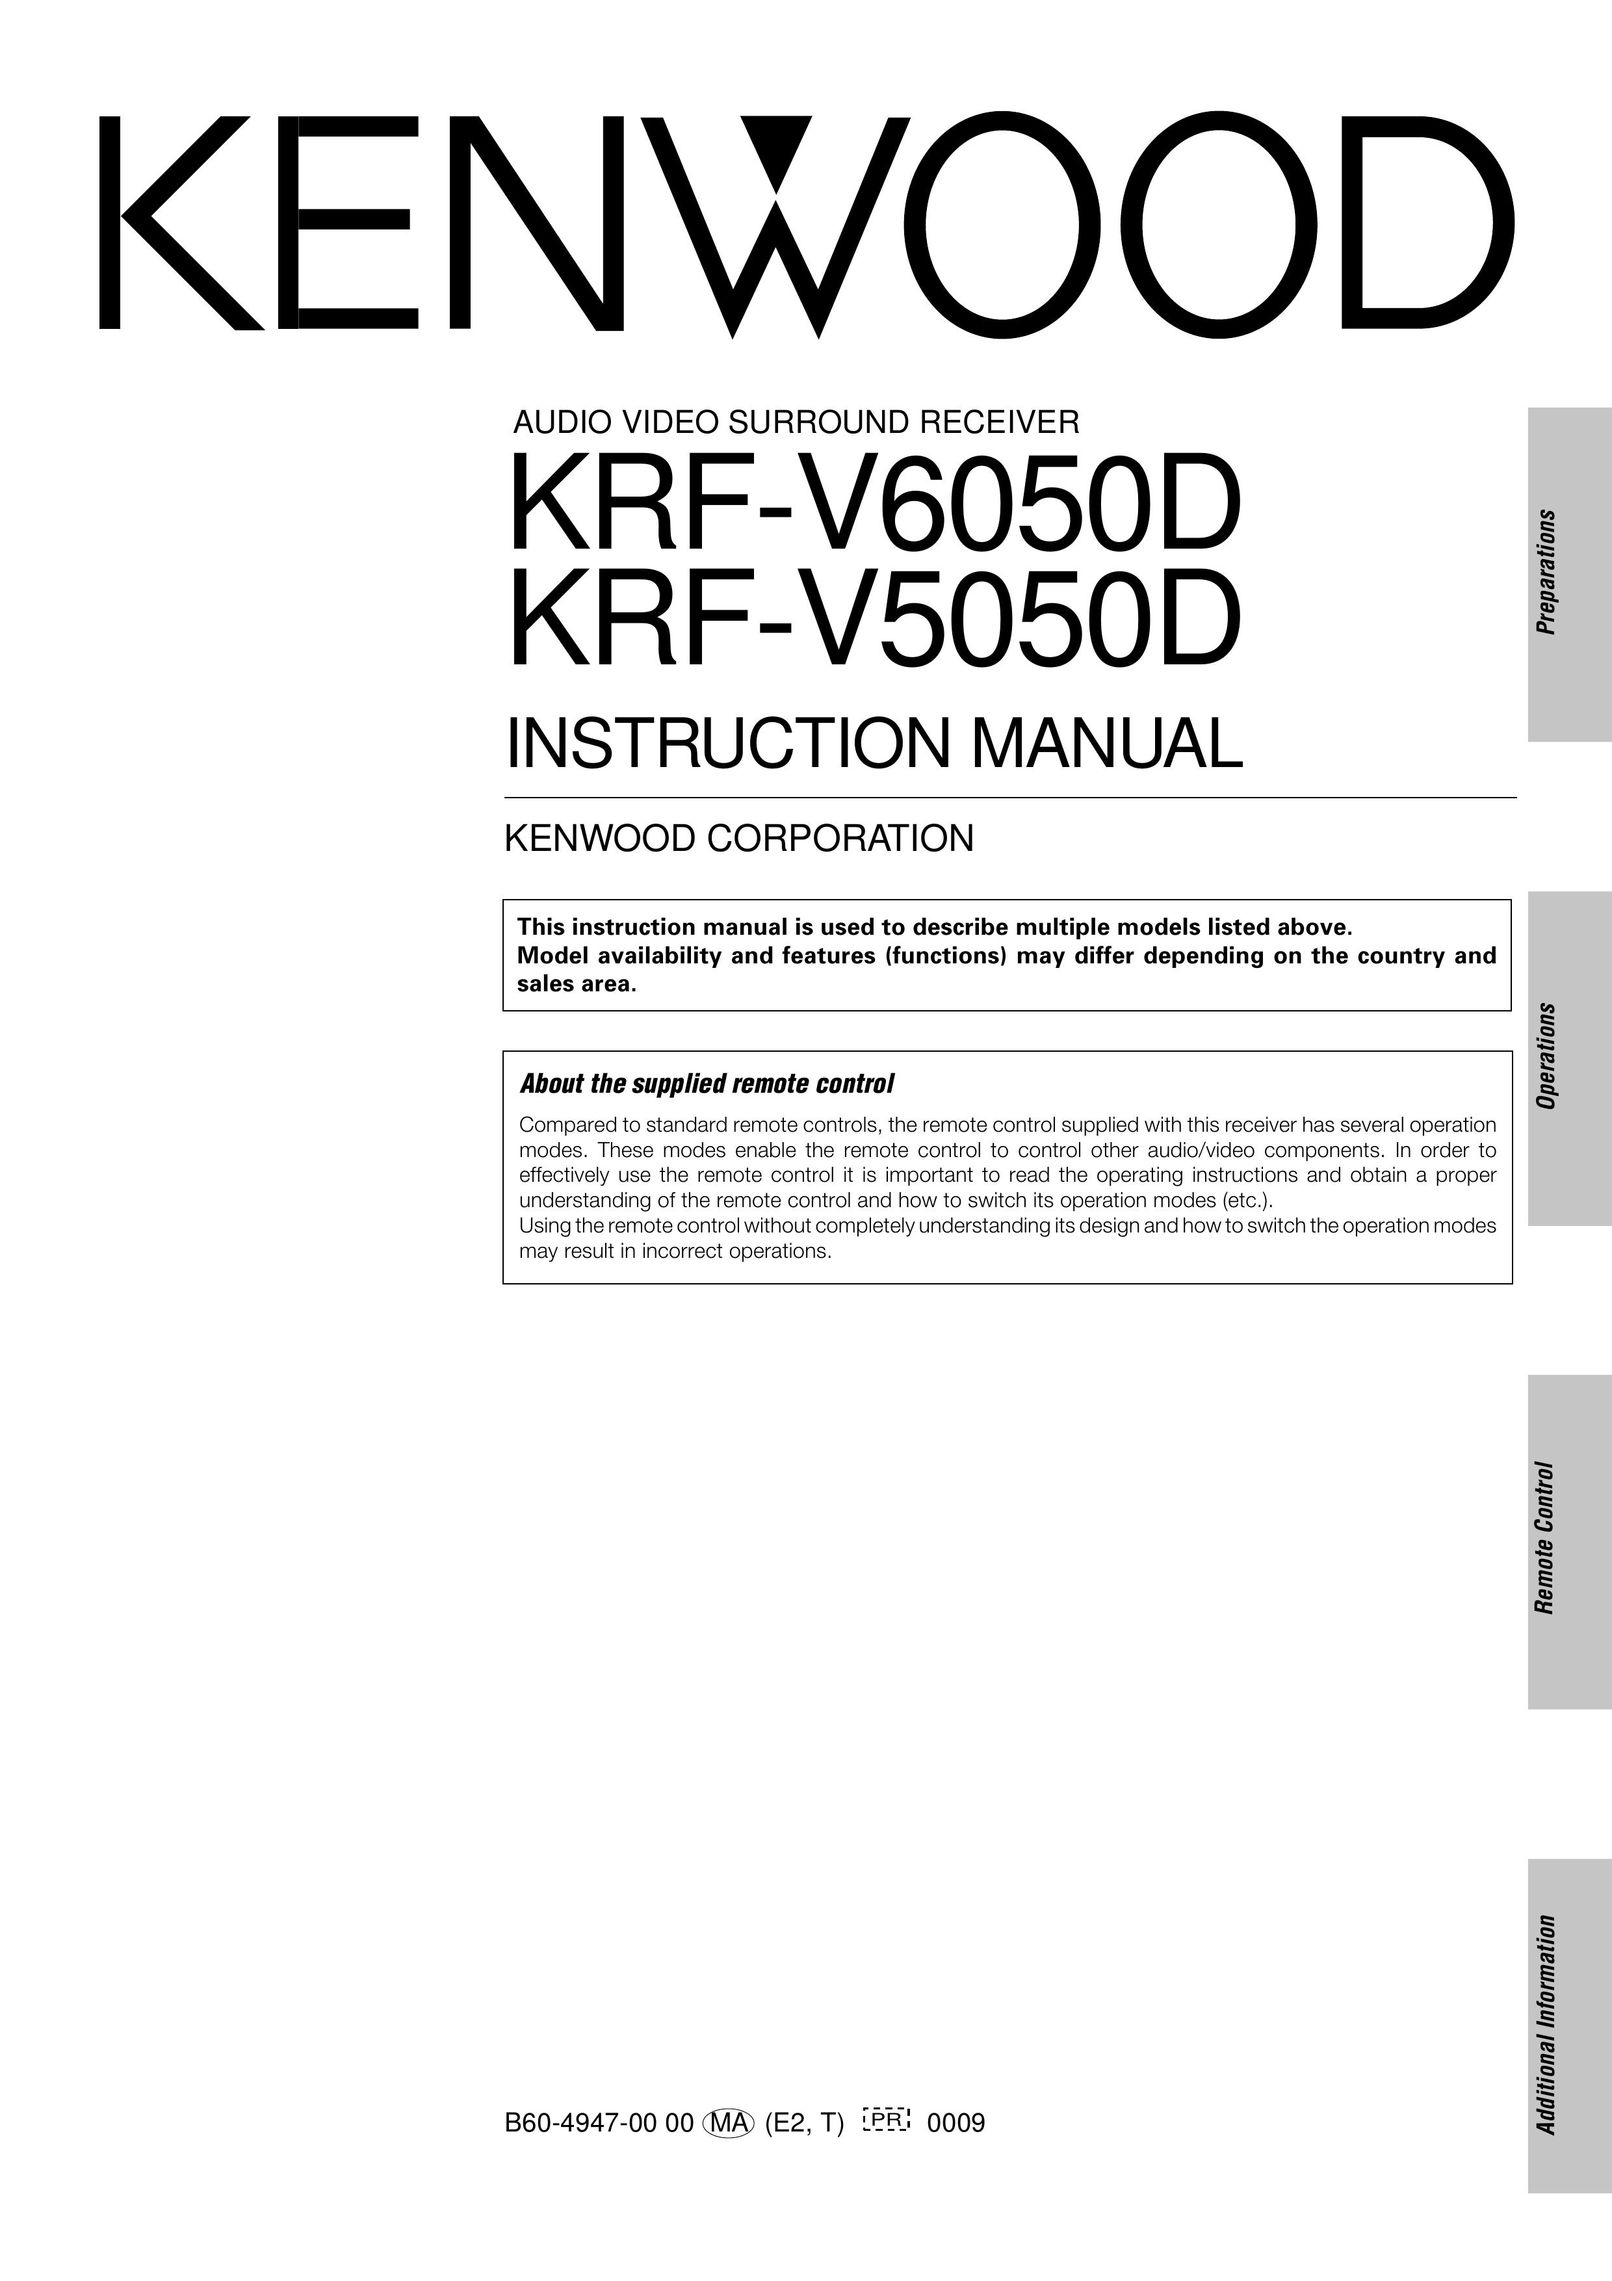 Kenwood KRF-V6050D Home Theater System User Manual